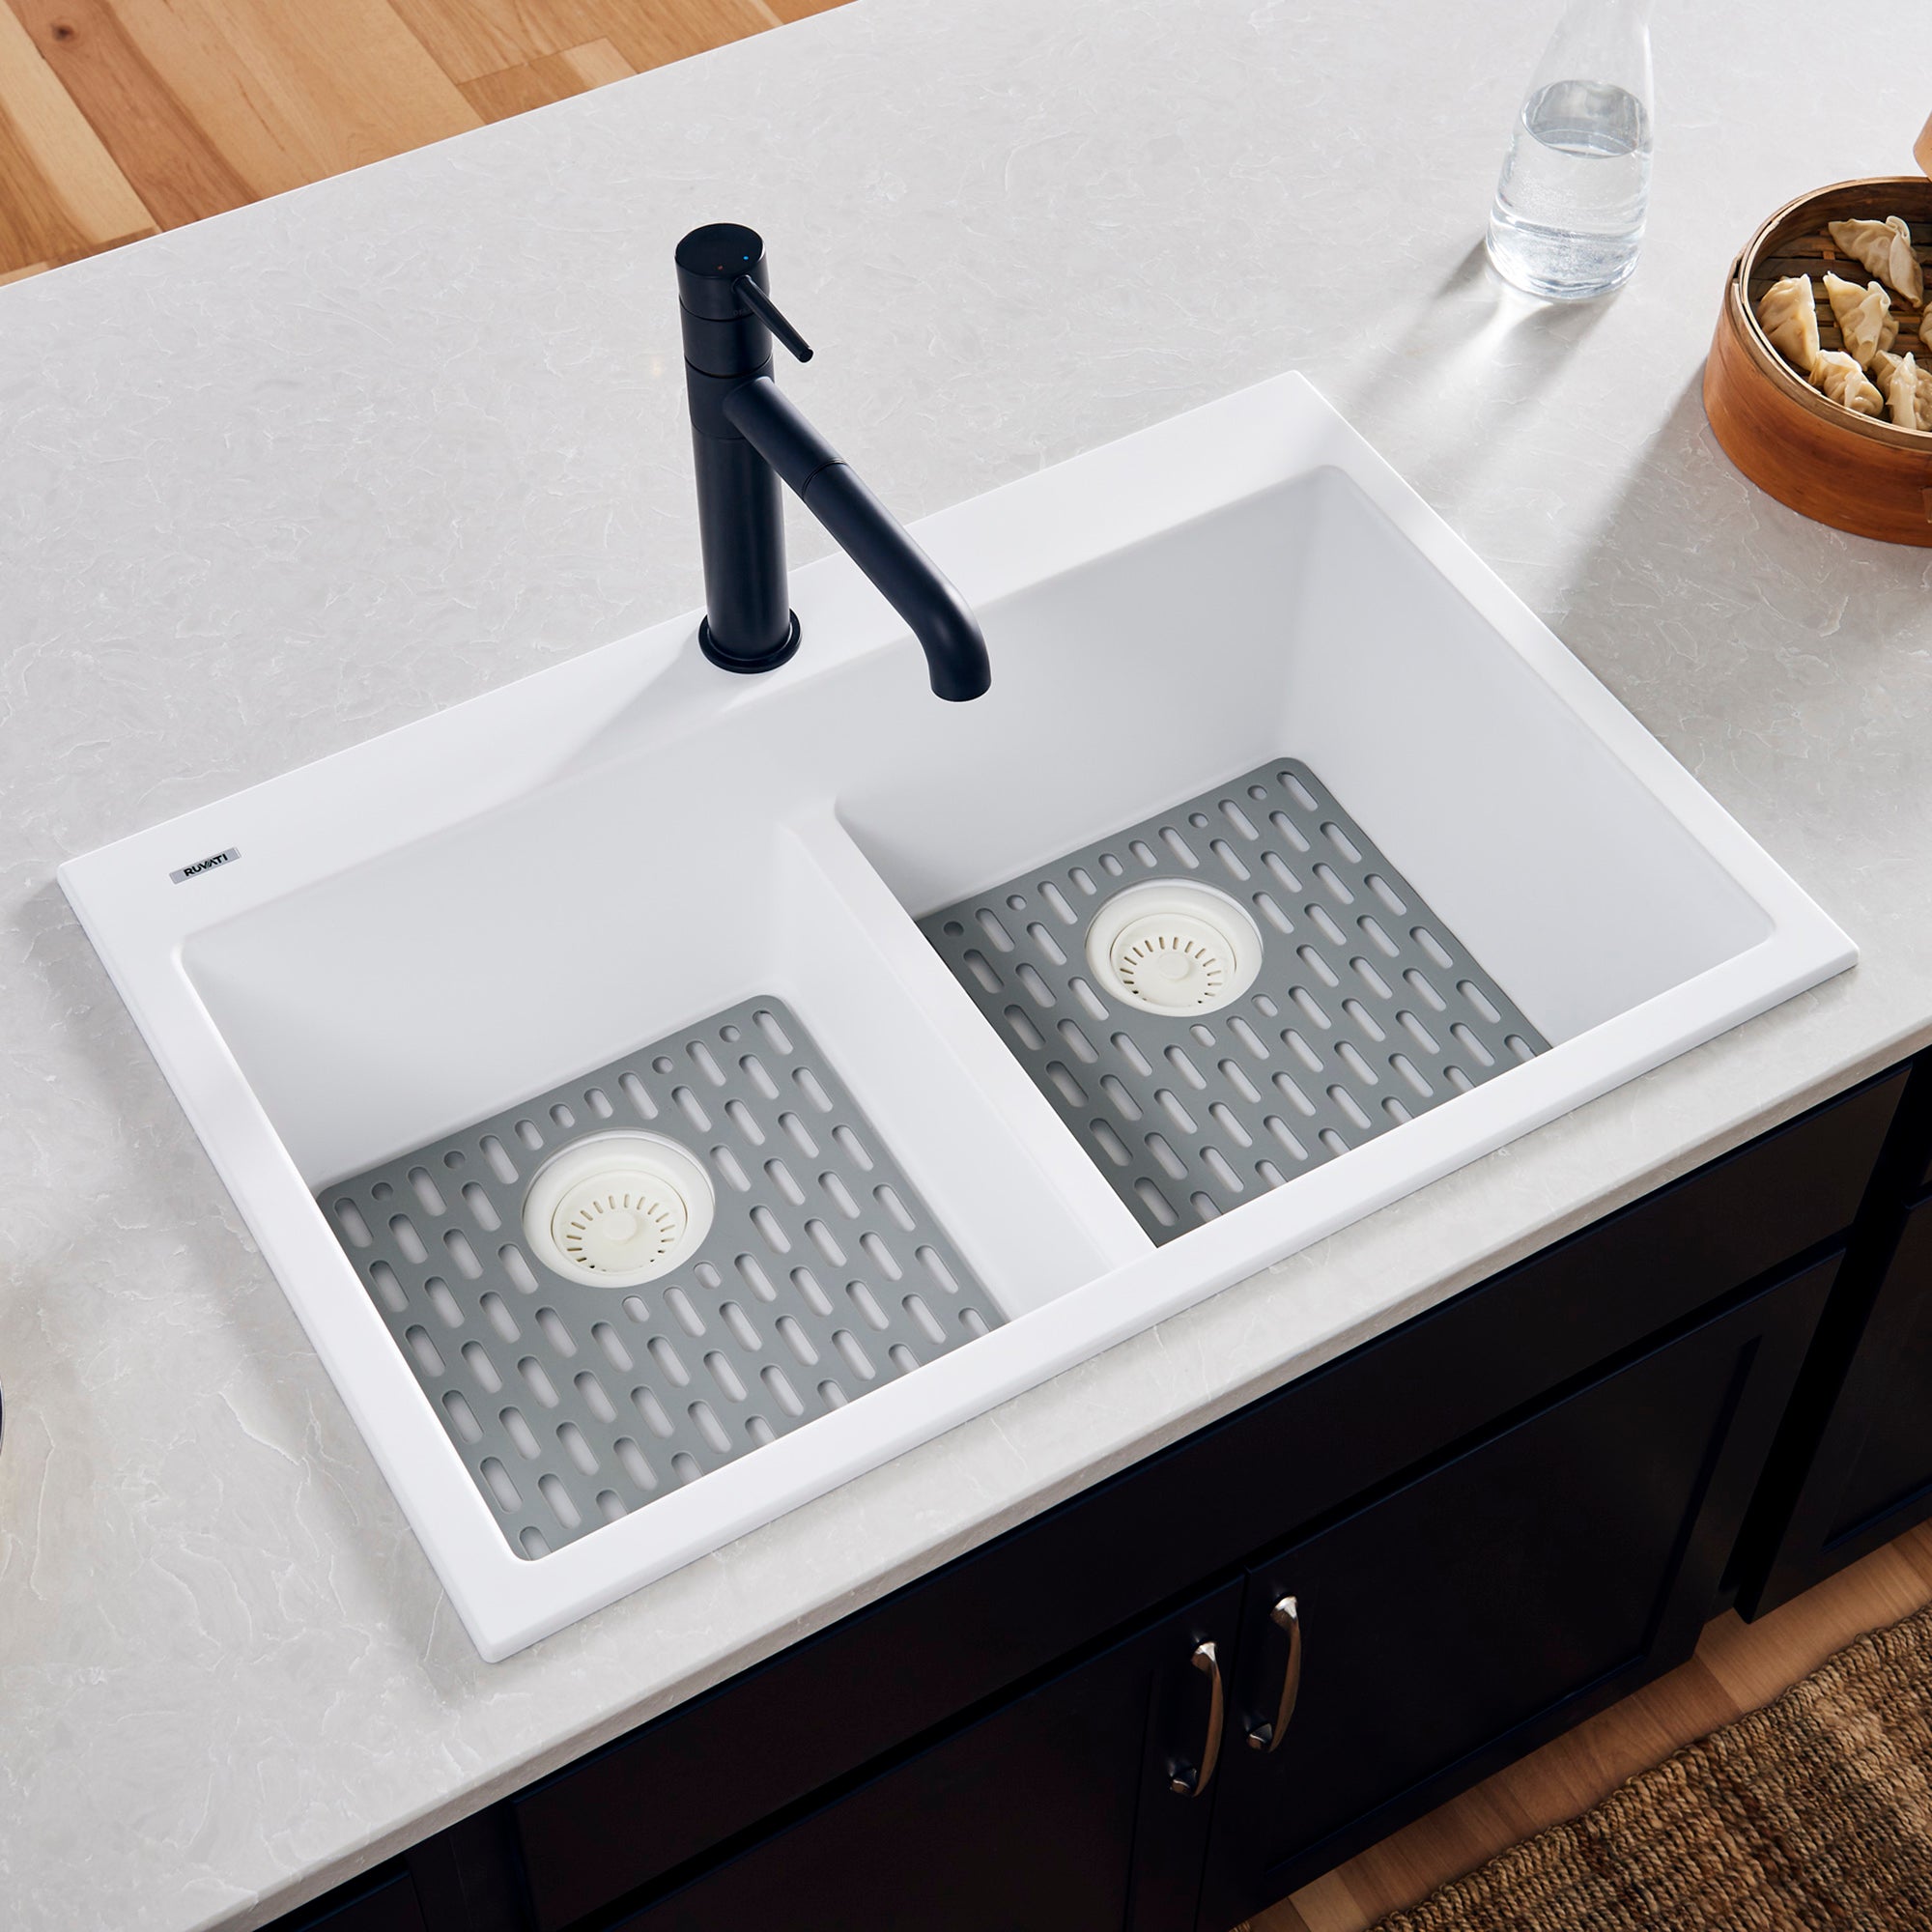 Ruvati 33 x 22 inch epiGranite Drop-in TopMount Granite Composite Double Bowl Low Divide Kitchen Sink – Arctic White – RVG1385WH